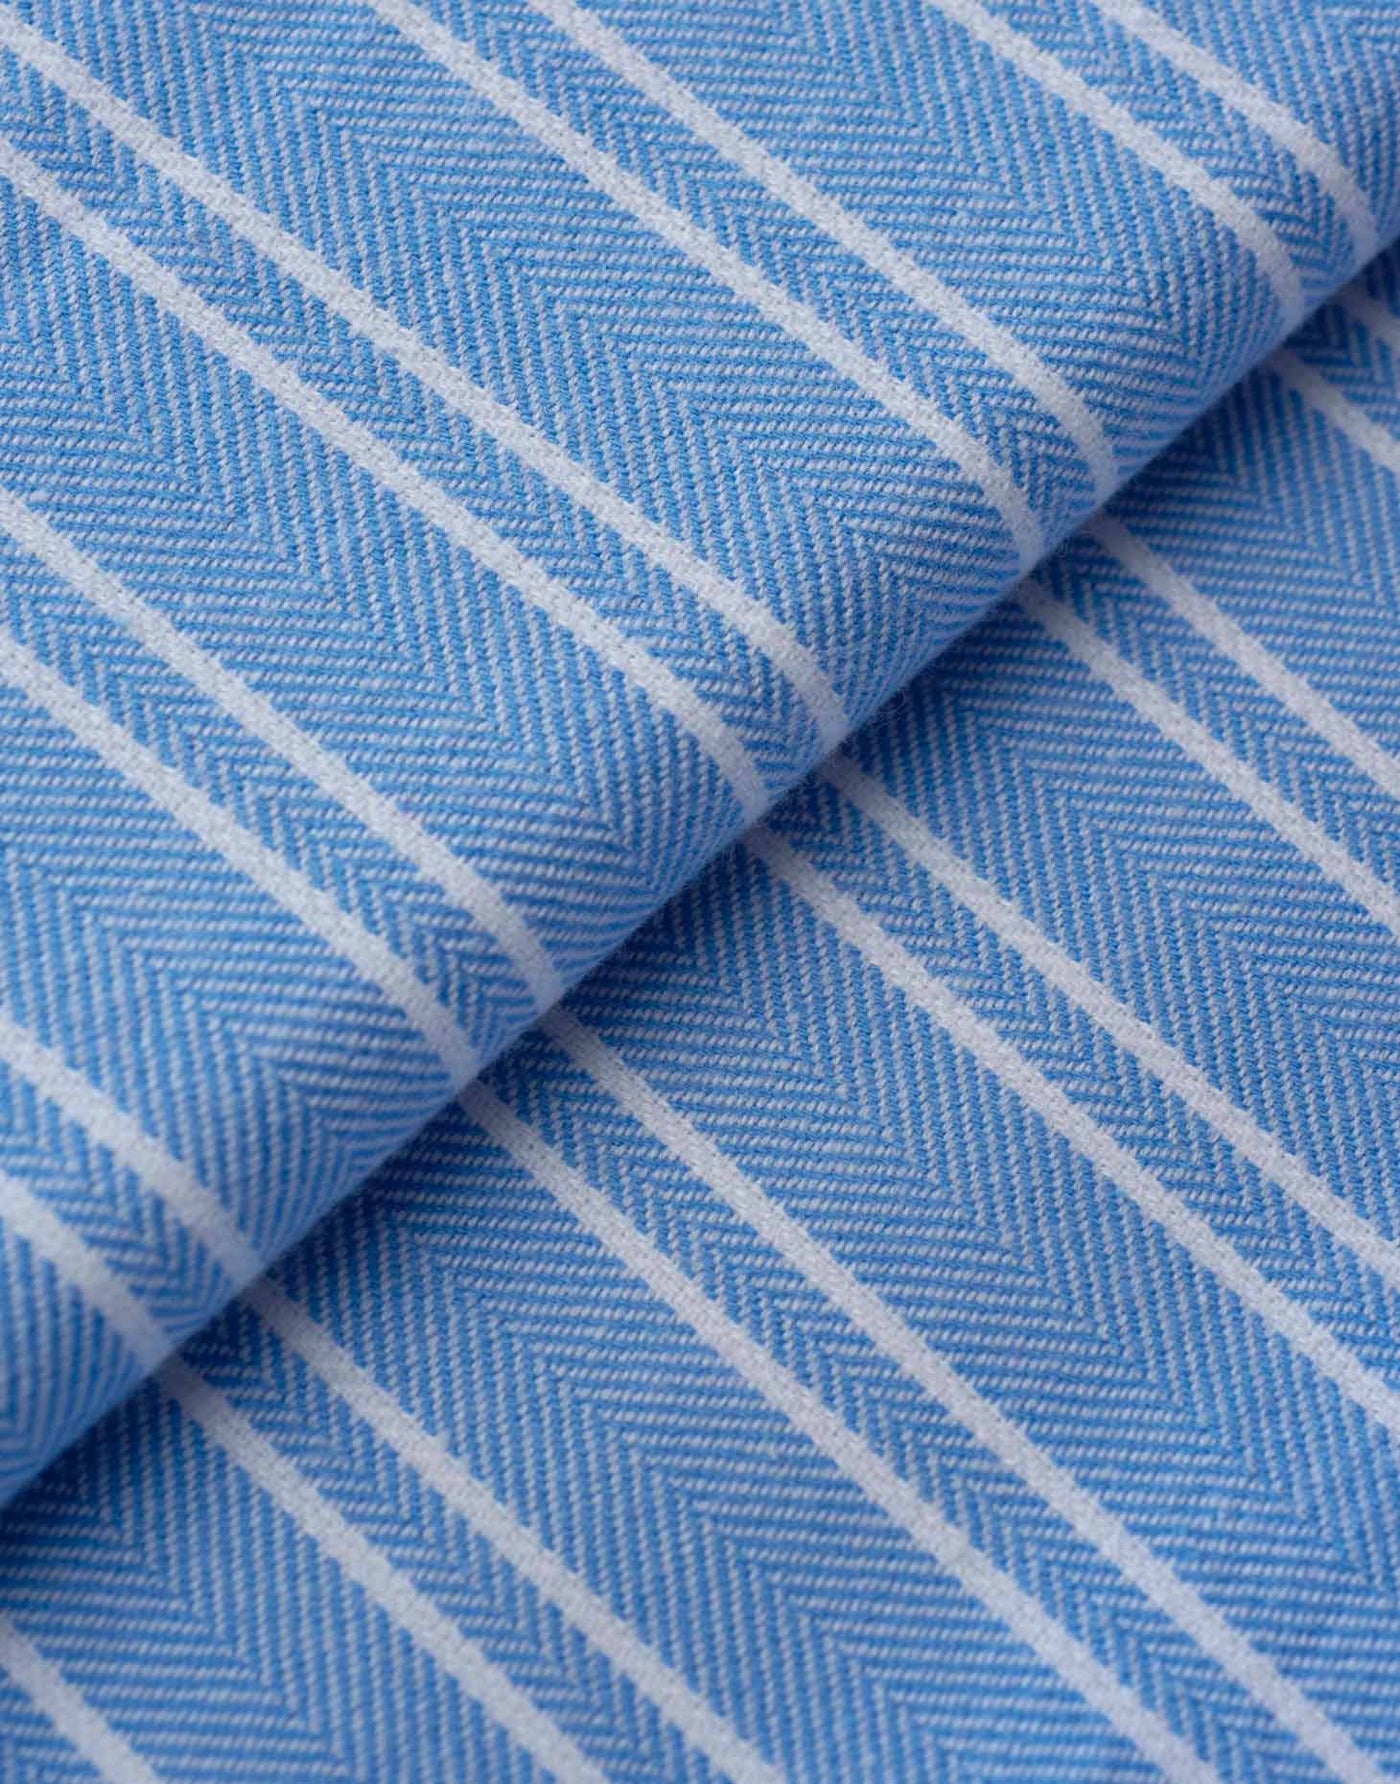 Women's Brushed Cotton Pyjama Trousers - Westwood Blue Stripe